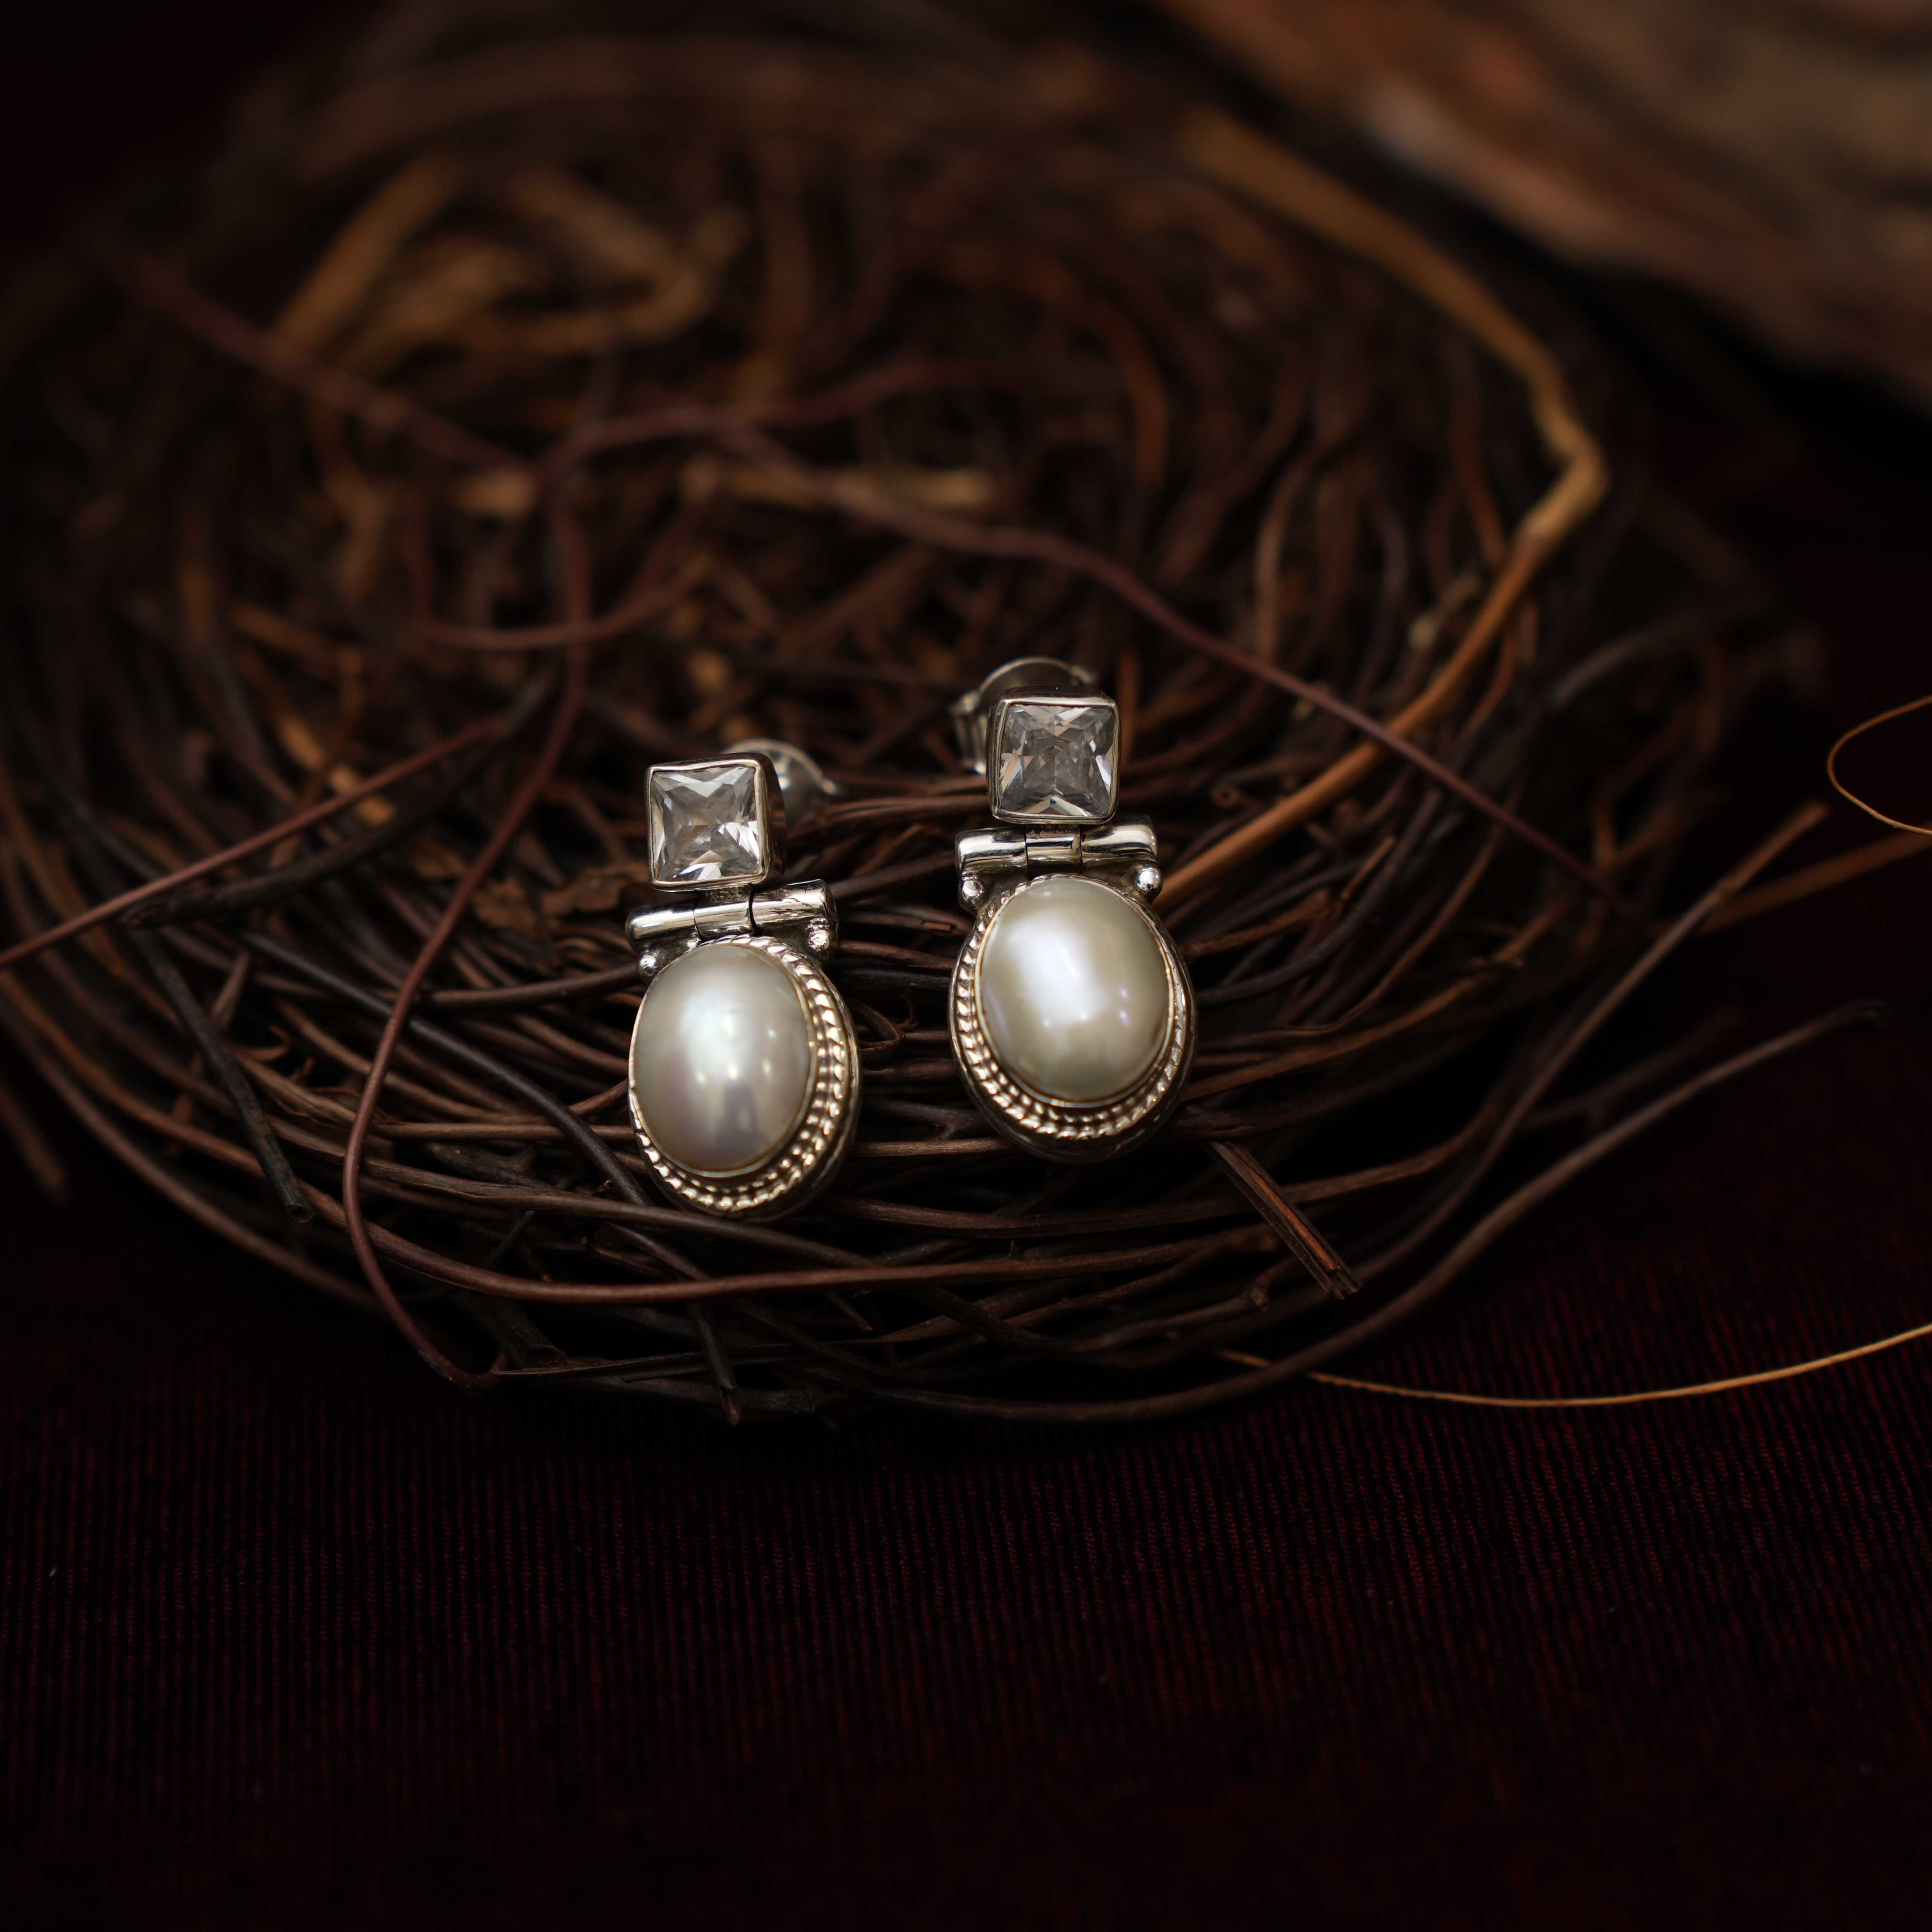 Radhi 925 Oxidized Silver Earrings - Pearl